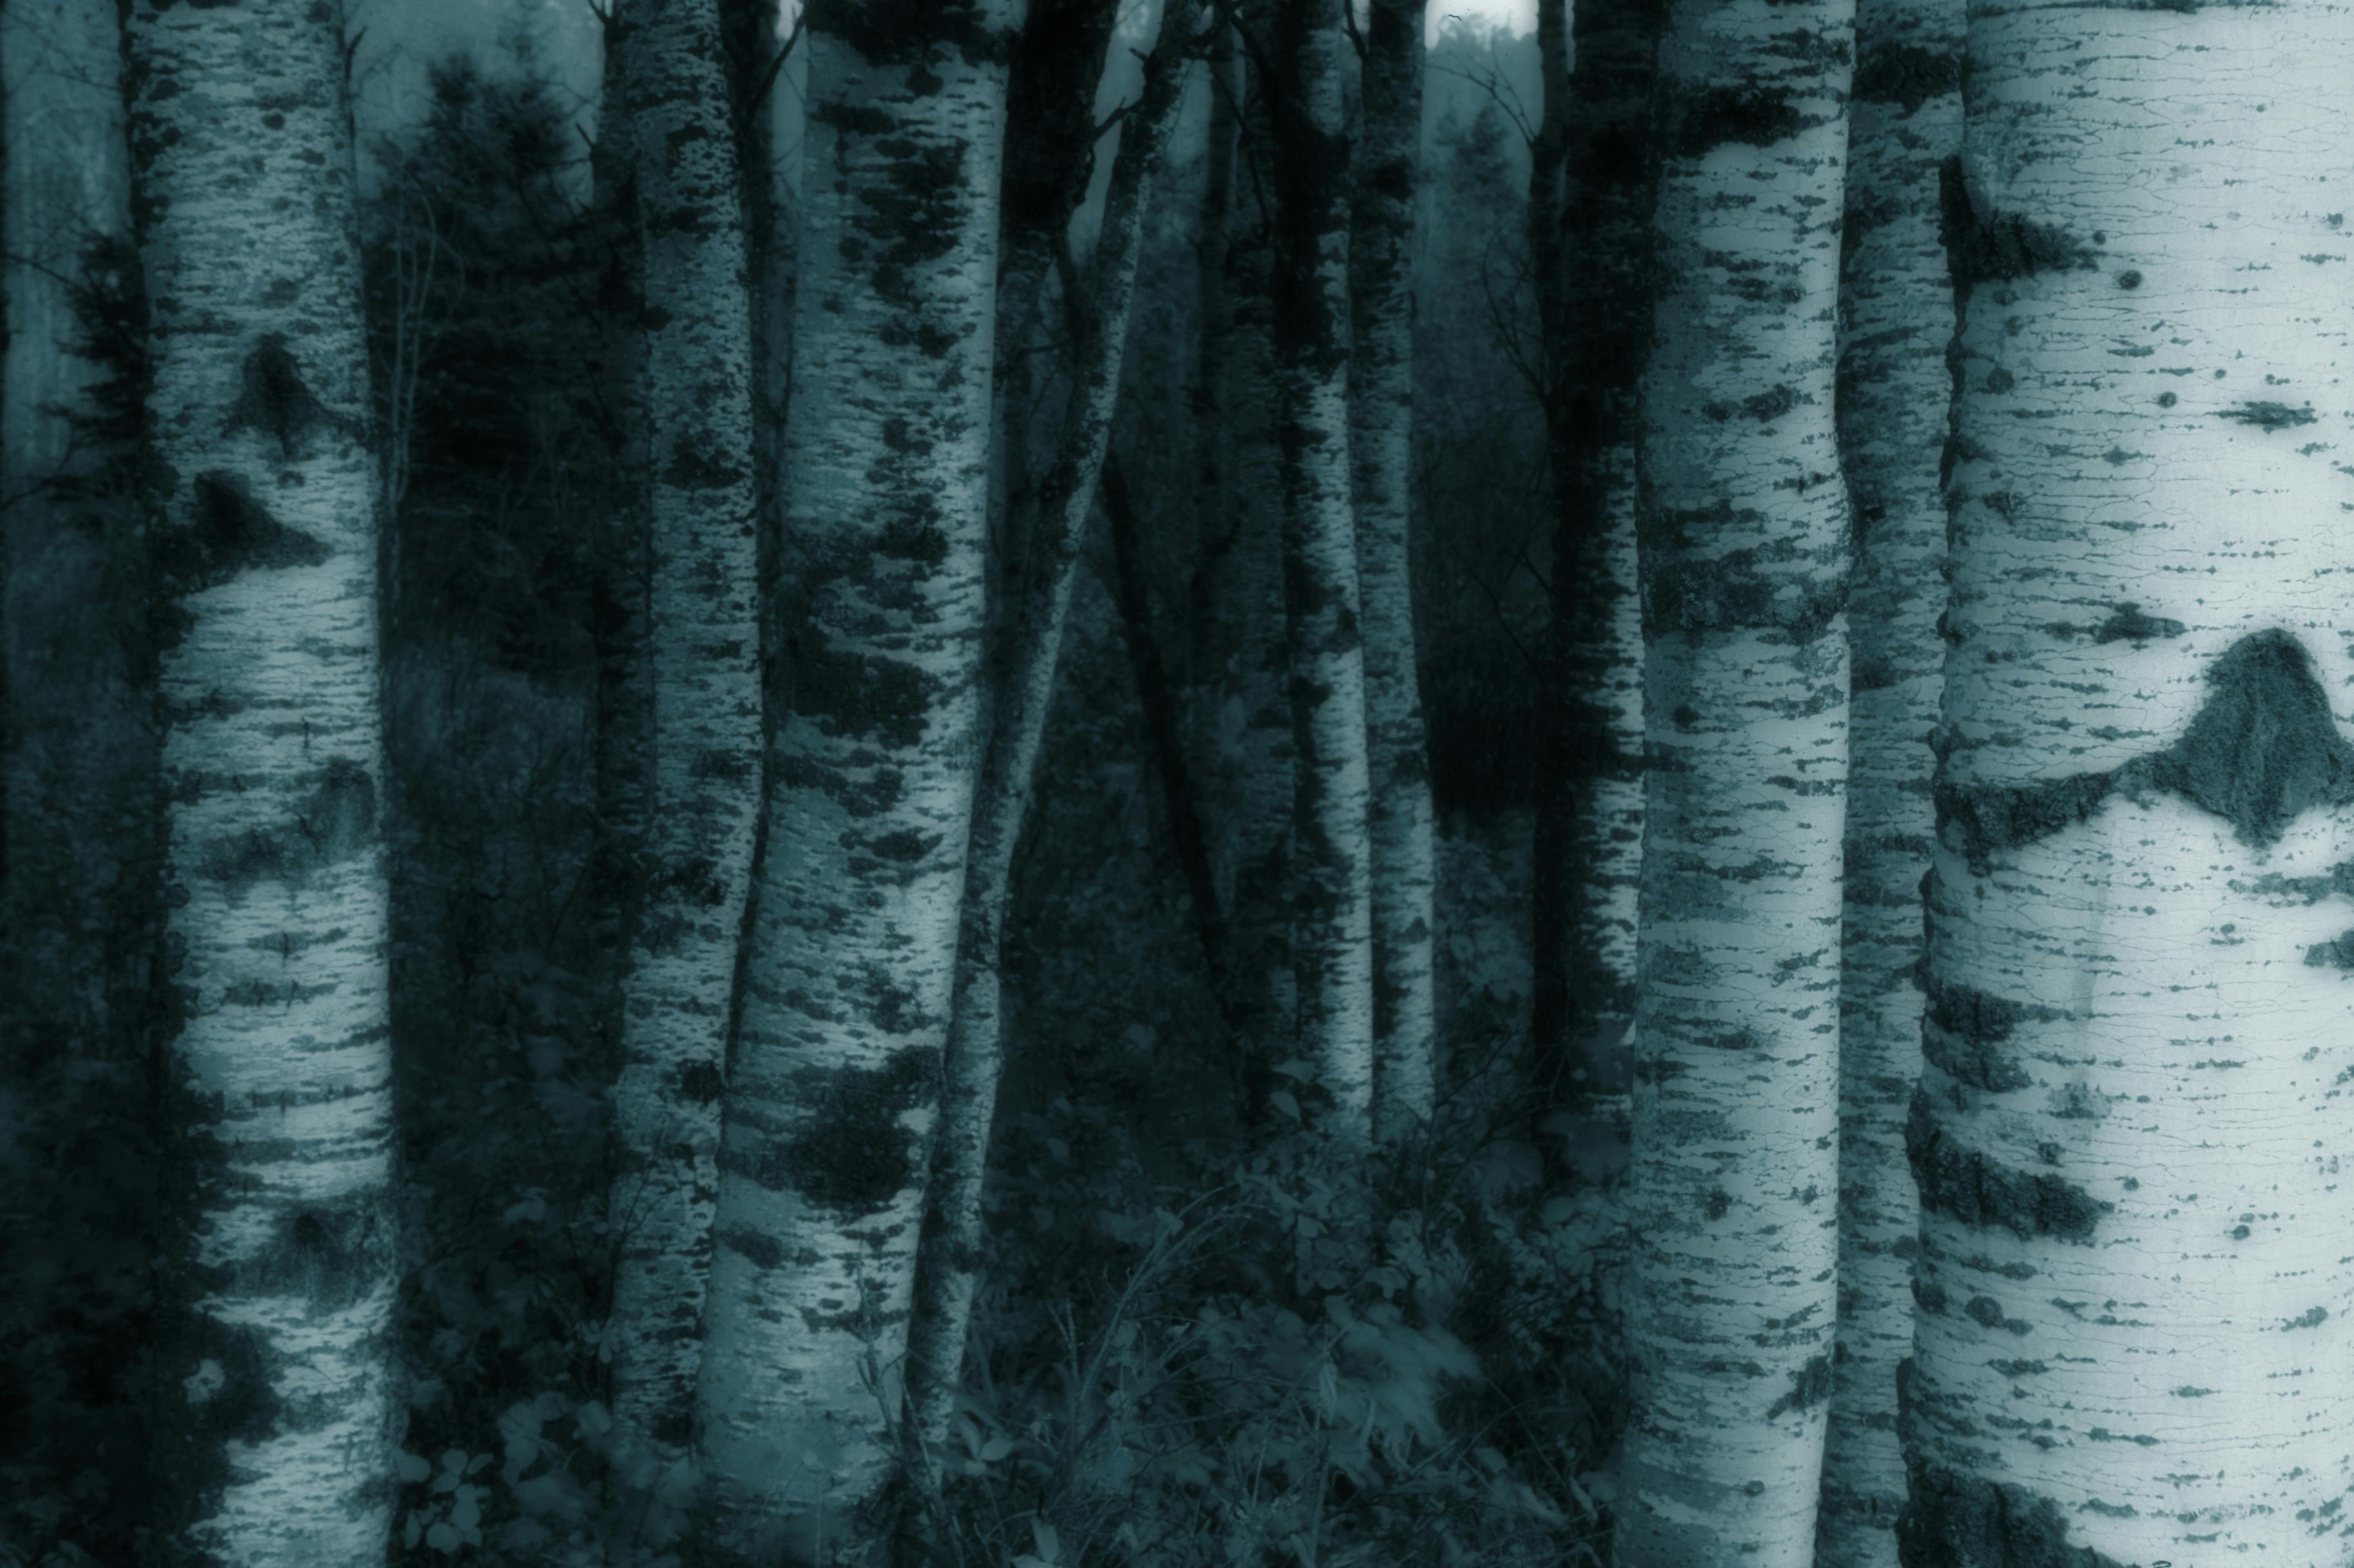 Free stock photo of birch trees, trees